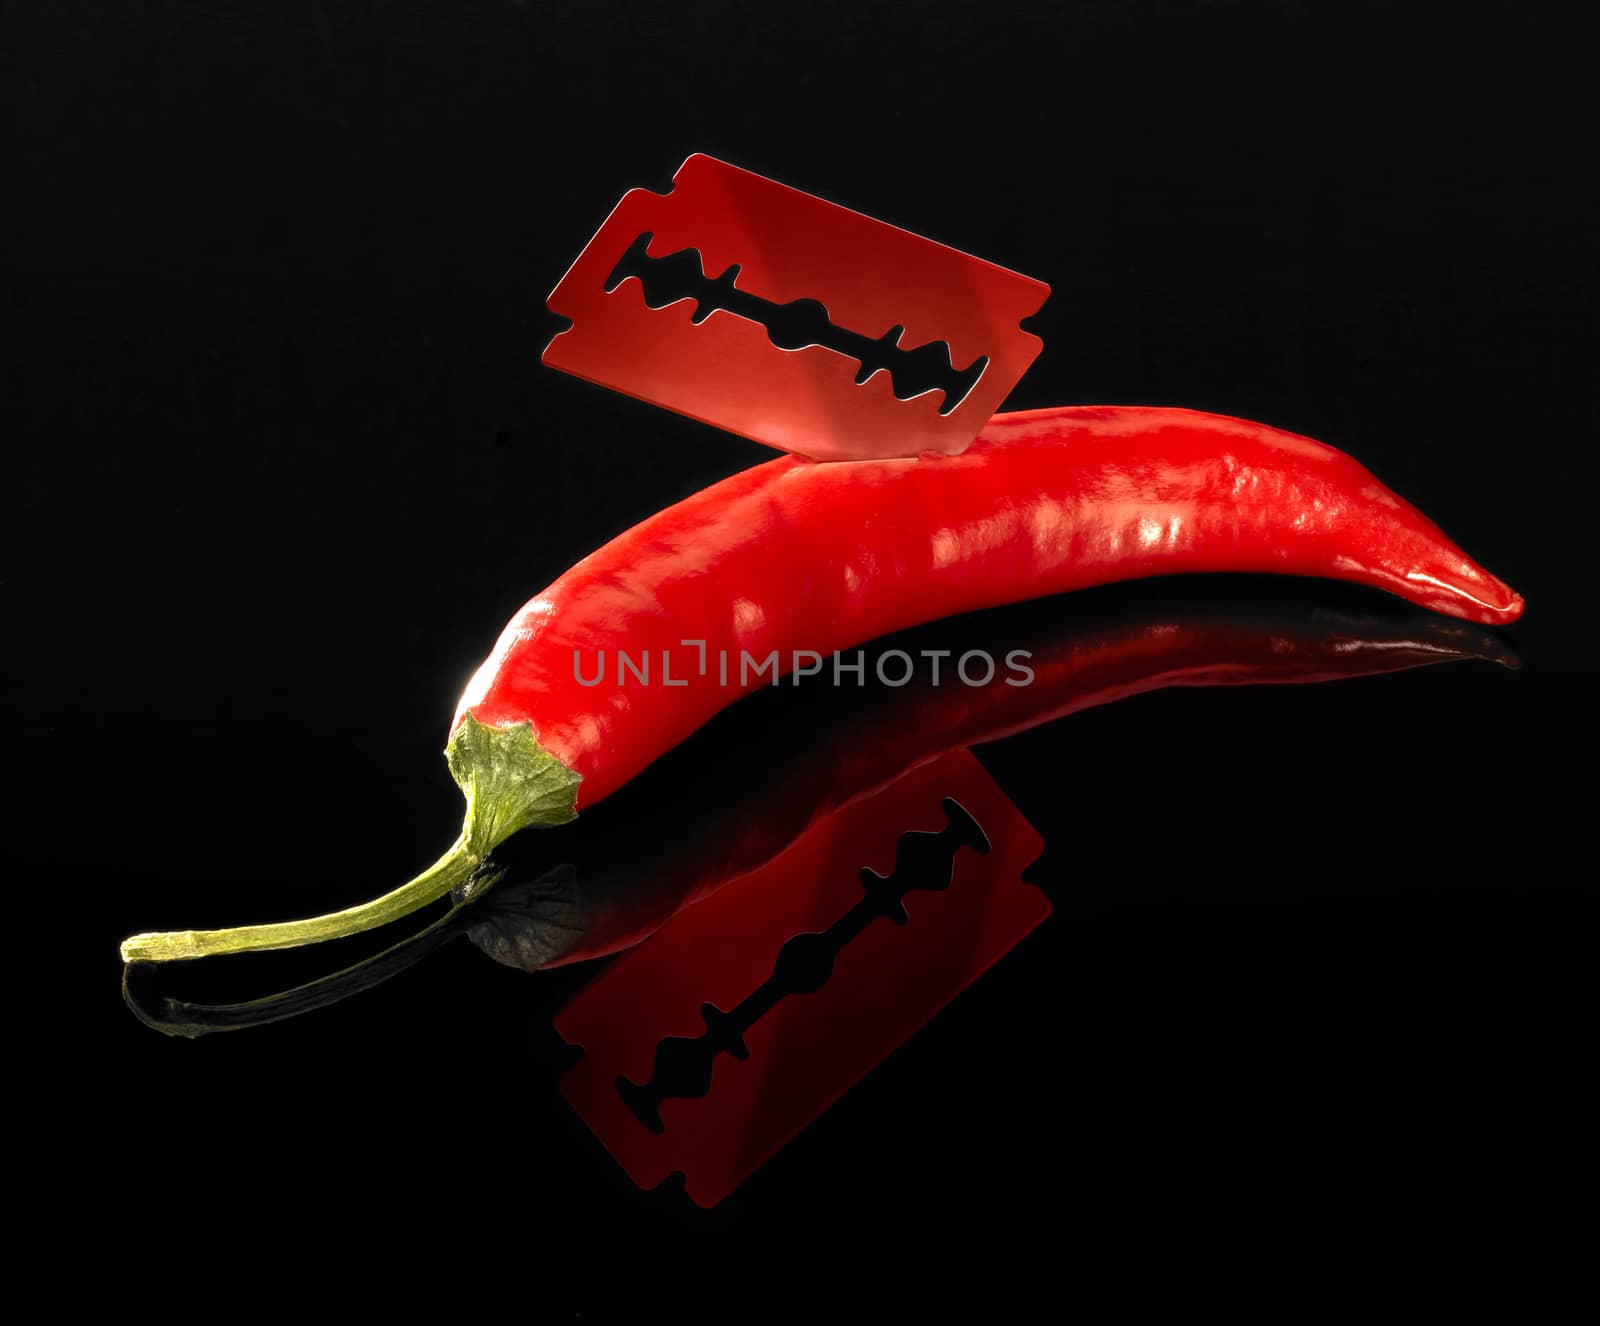 studio shot of a sharp razor blade and red hot chili in dark reflective back